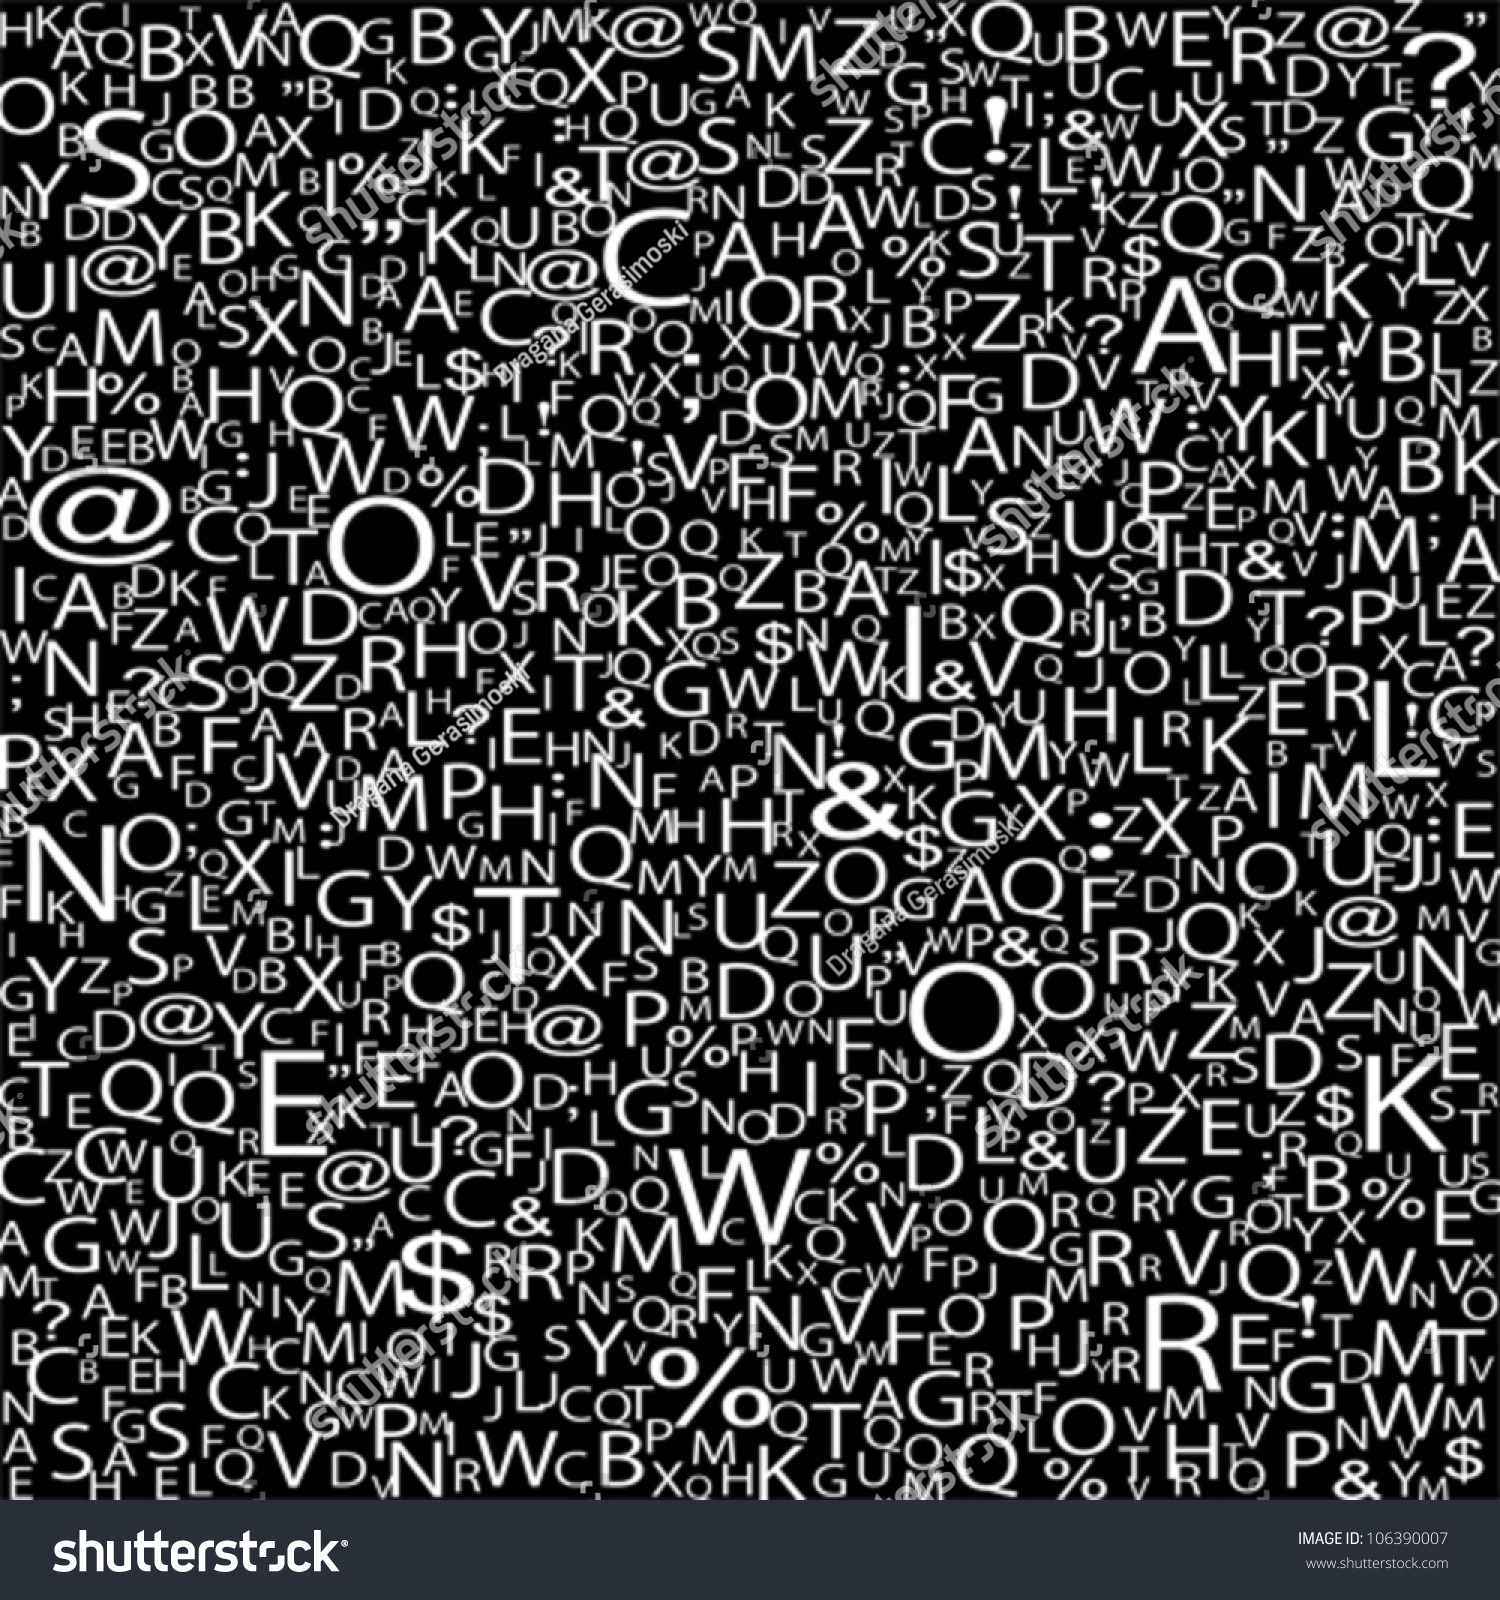 Alphabet Background, Vector - 106390007 : Shutterstock